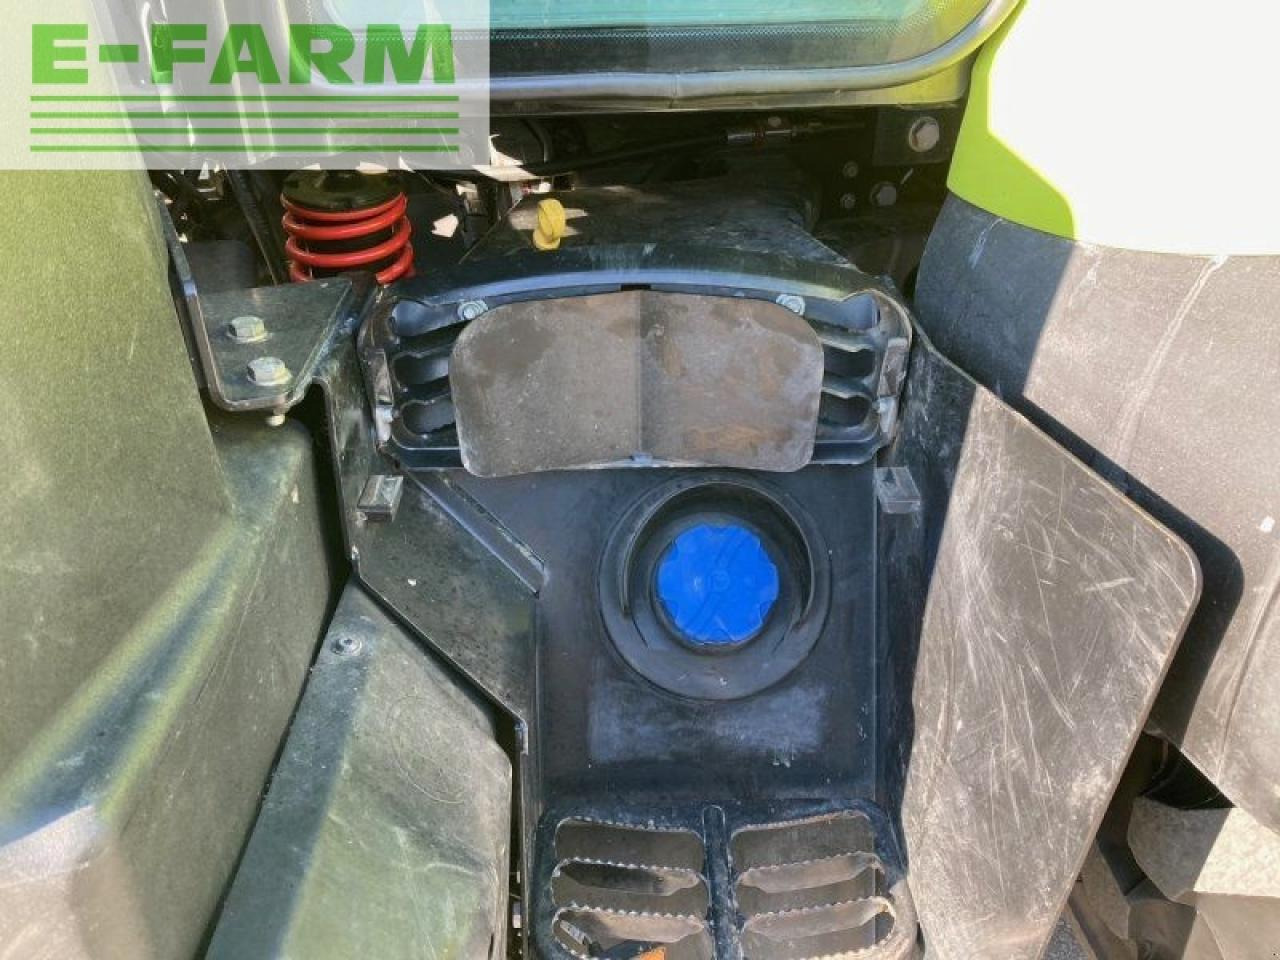 Farm tractor CLAAS arion 510 cmatic cis+